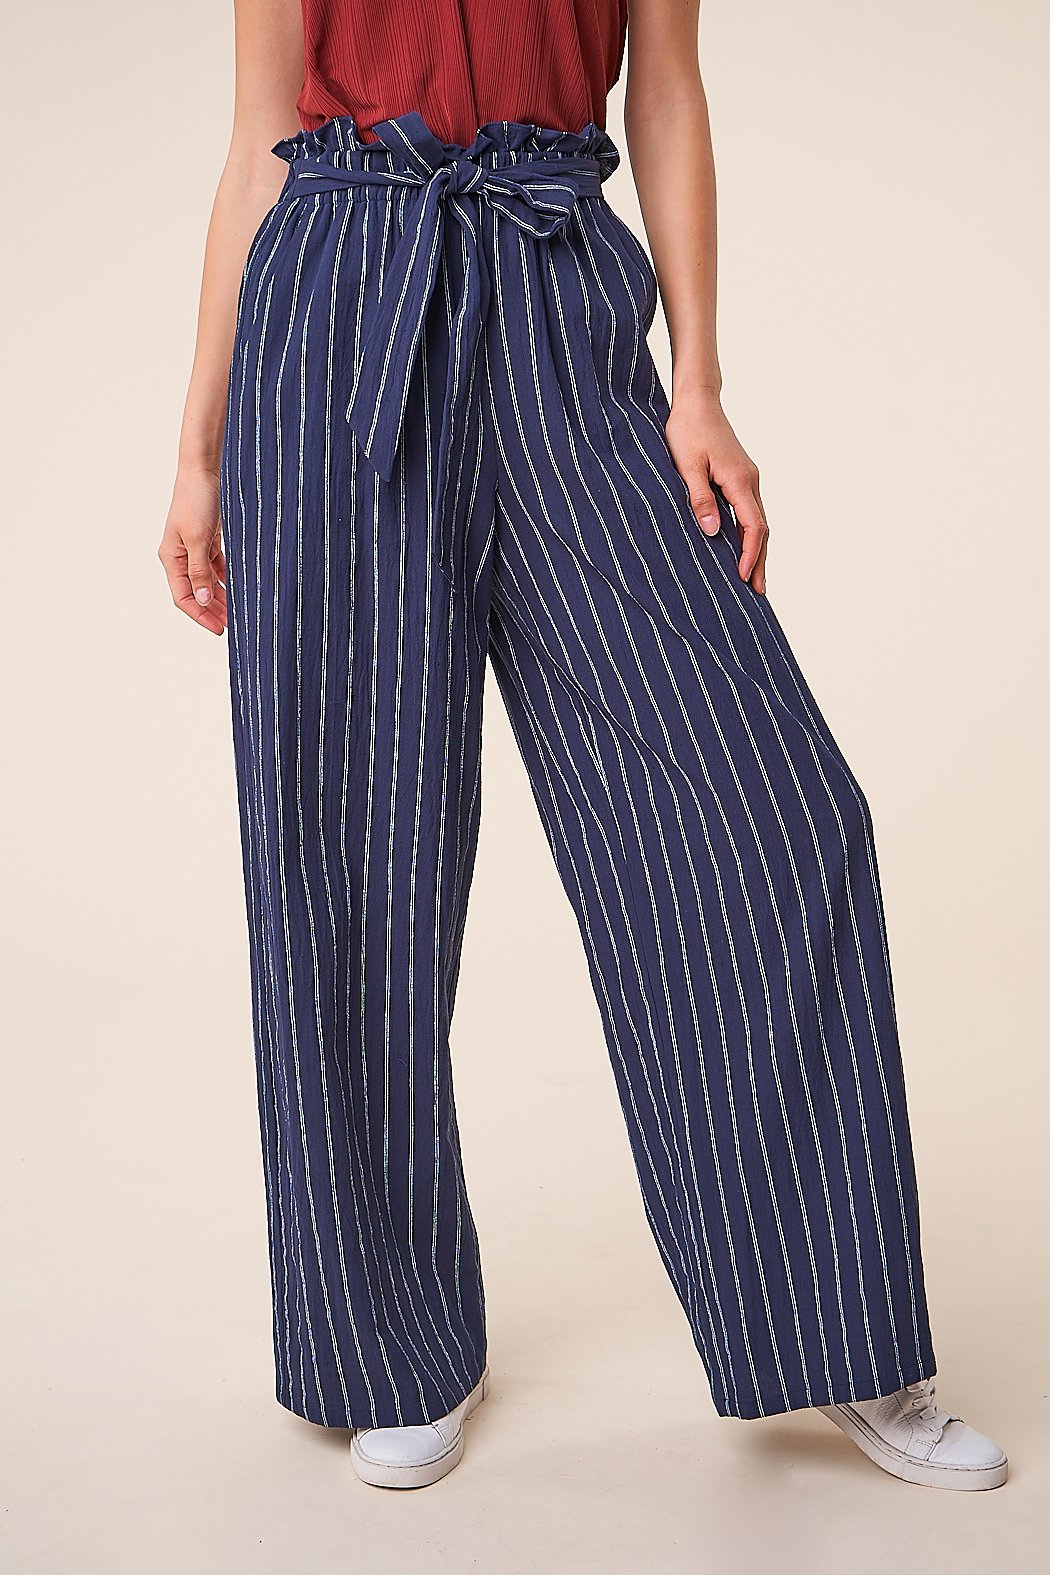 paperbag pants striped